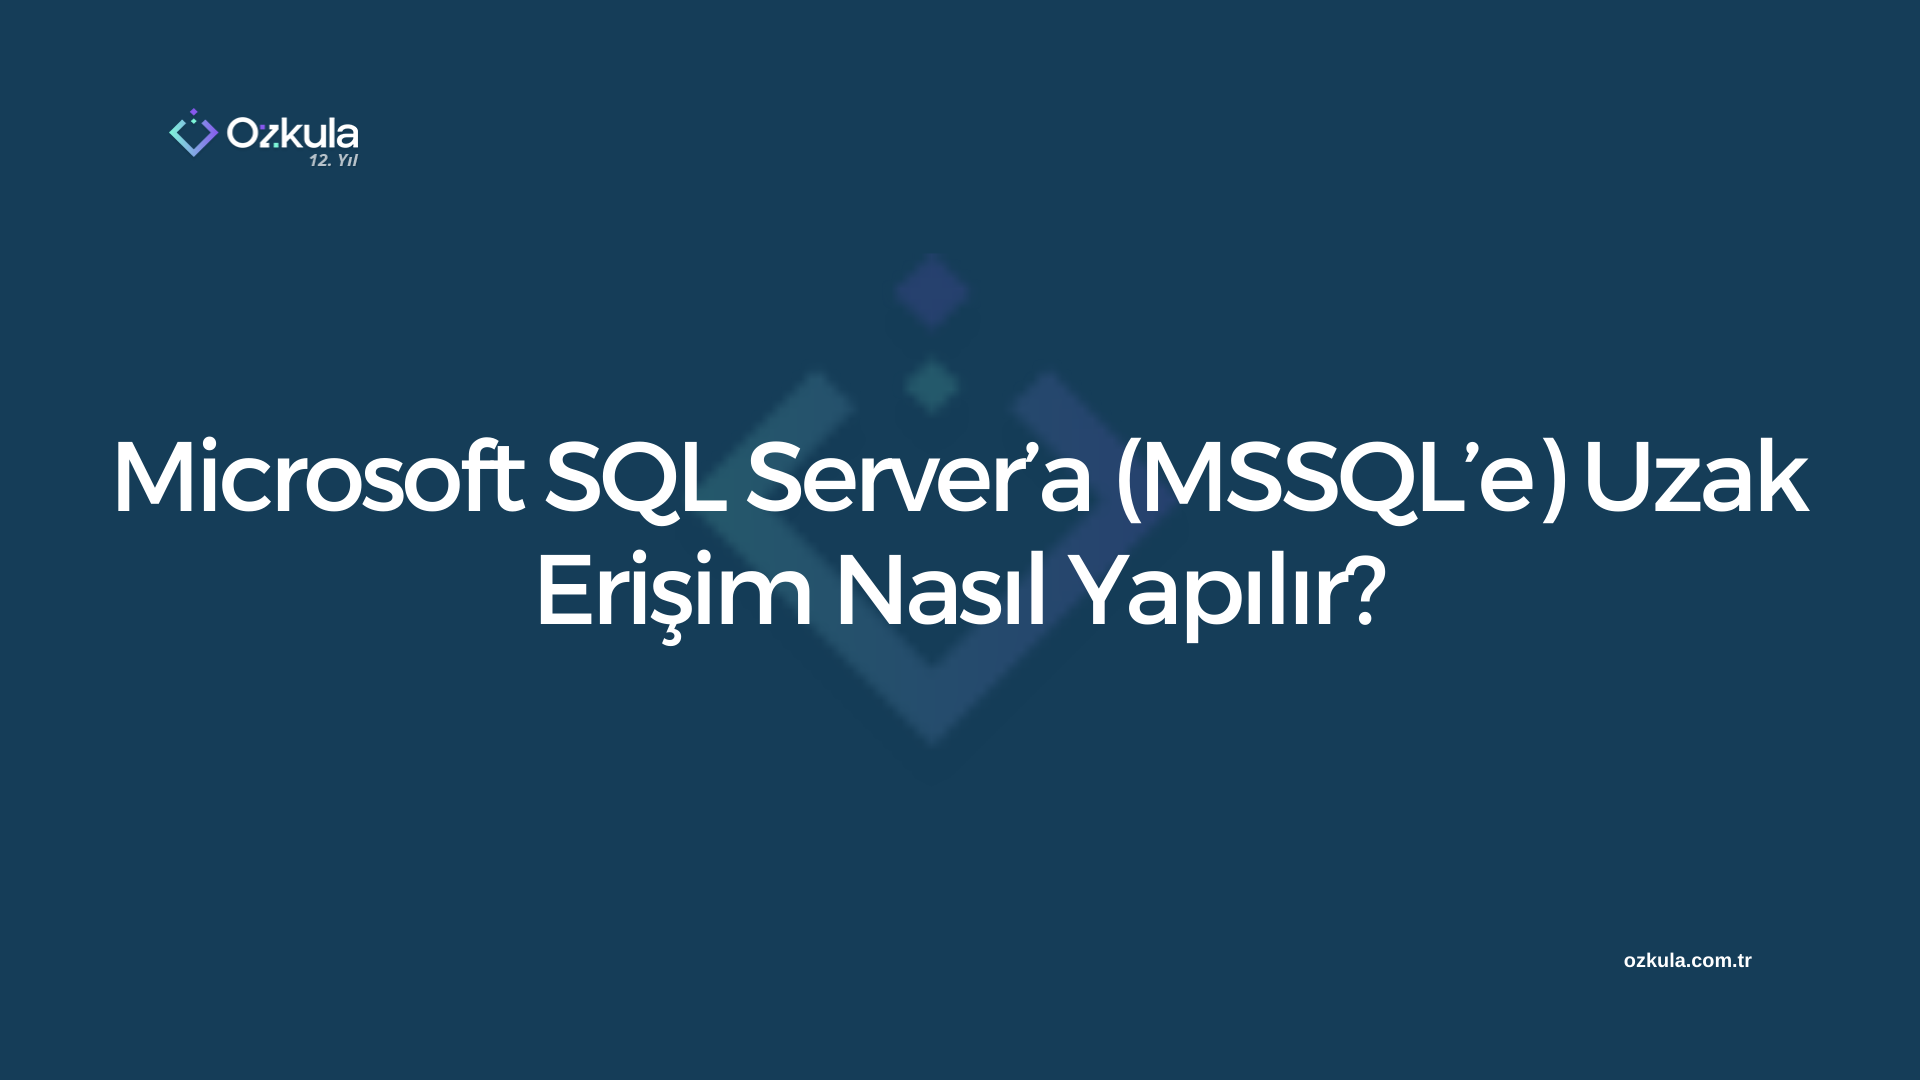 Microsoft SQL Server’a (MSSQL’e) Uzak Erişim Nasıl Yapılır?